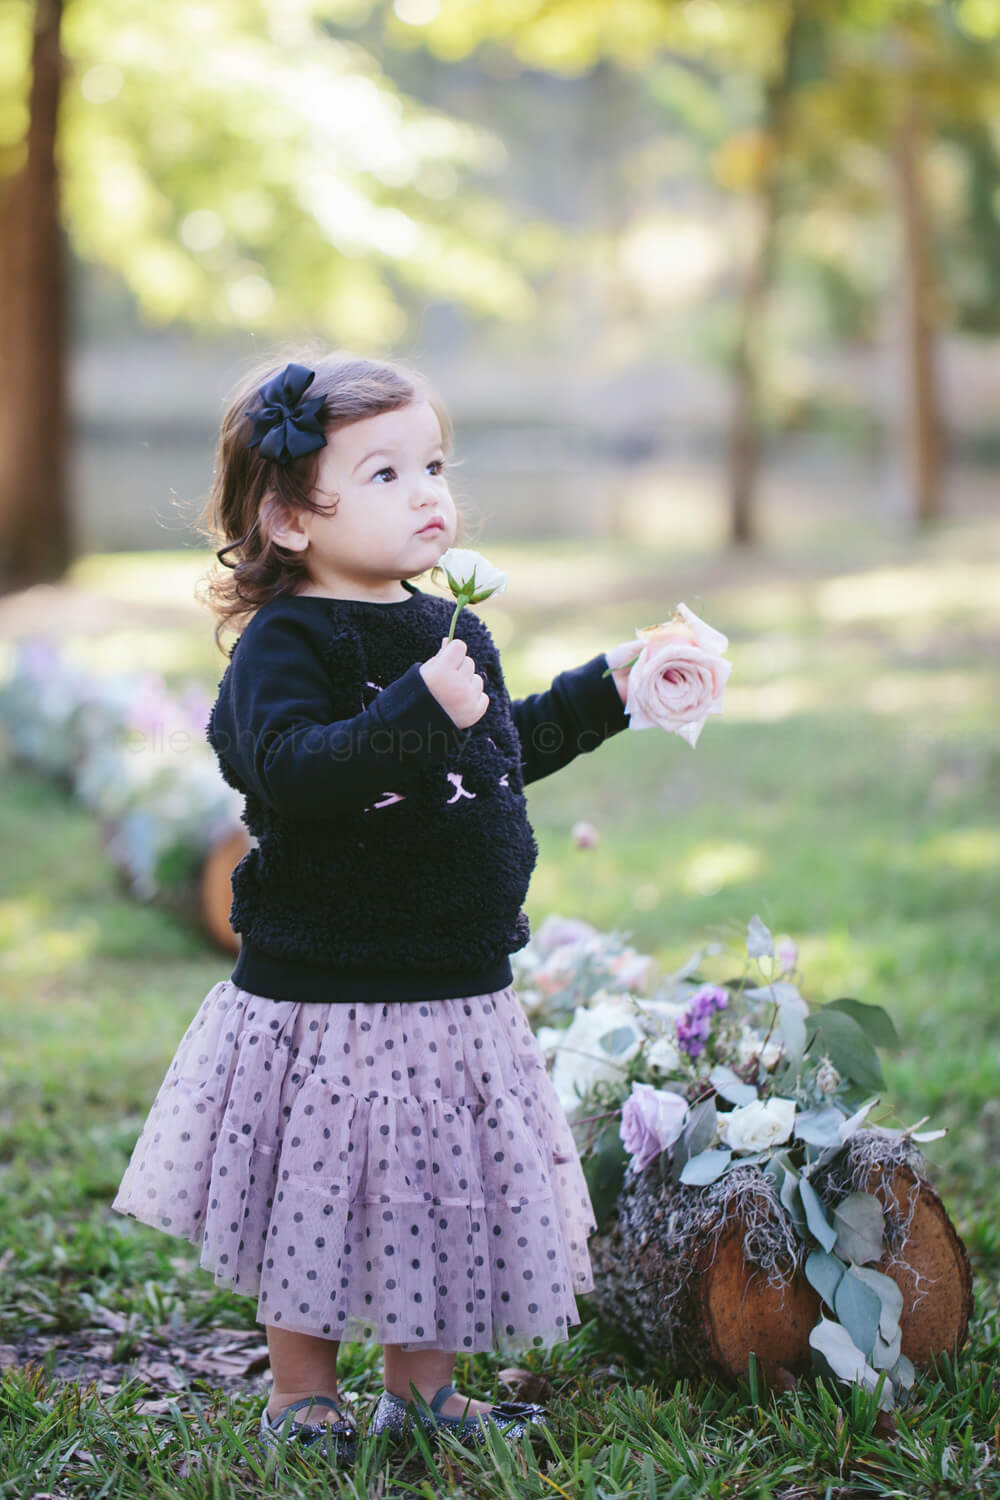 baby in polka dot skirt carrying flowers